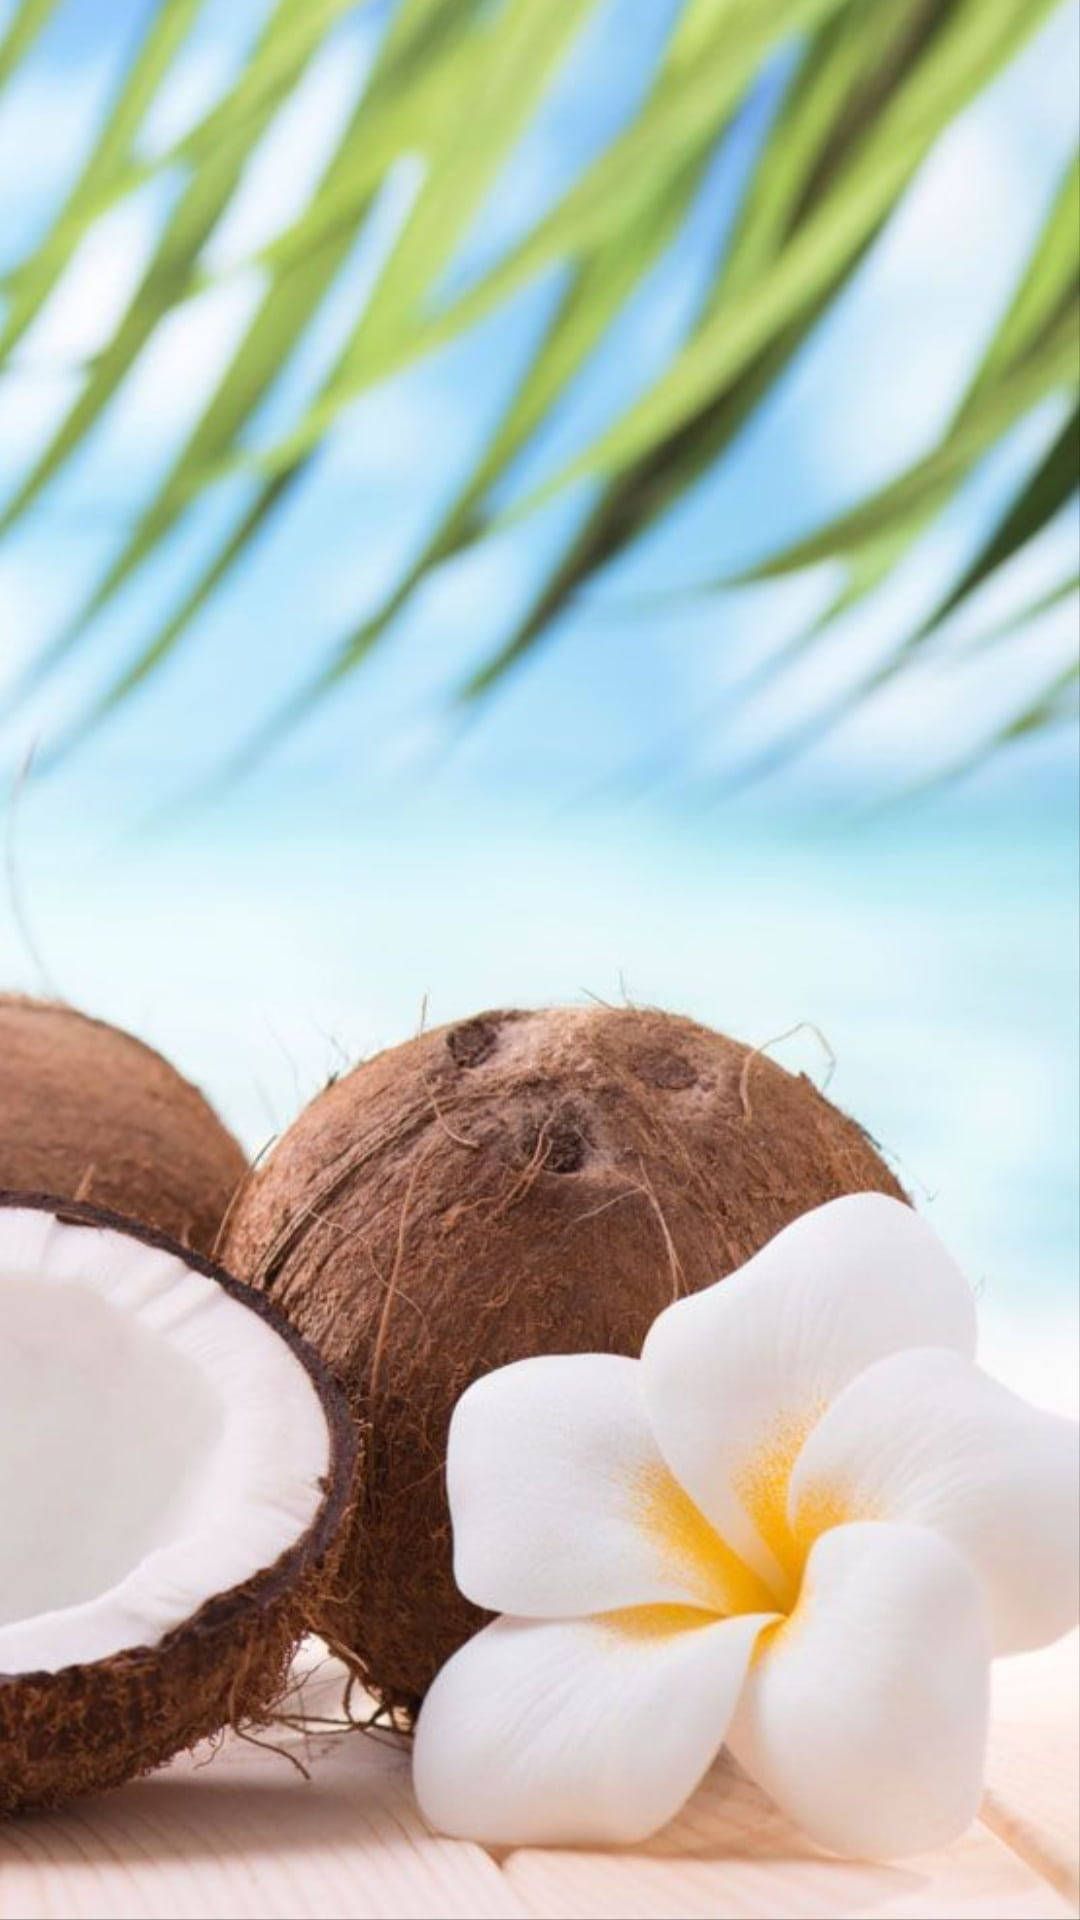 Coconut oil for hair - Coconut